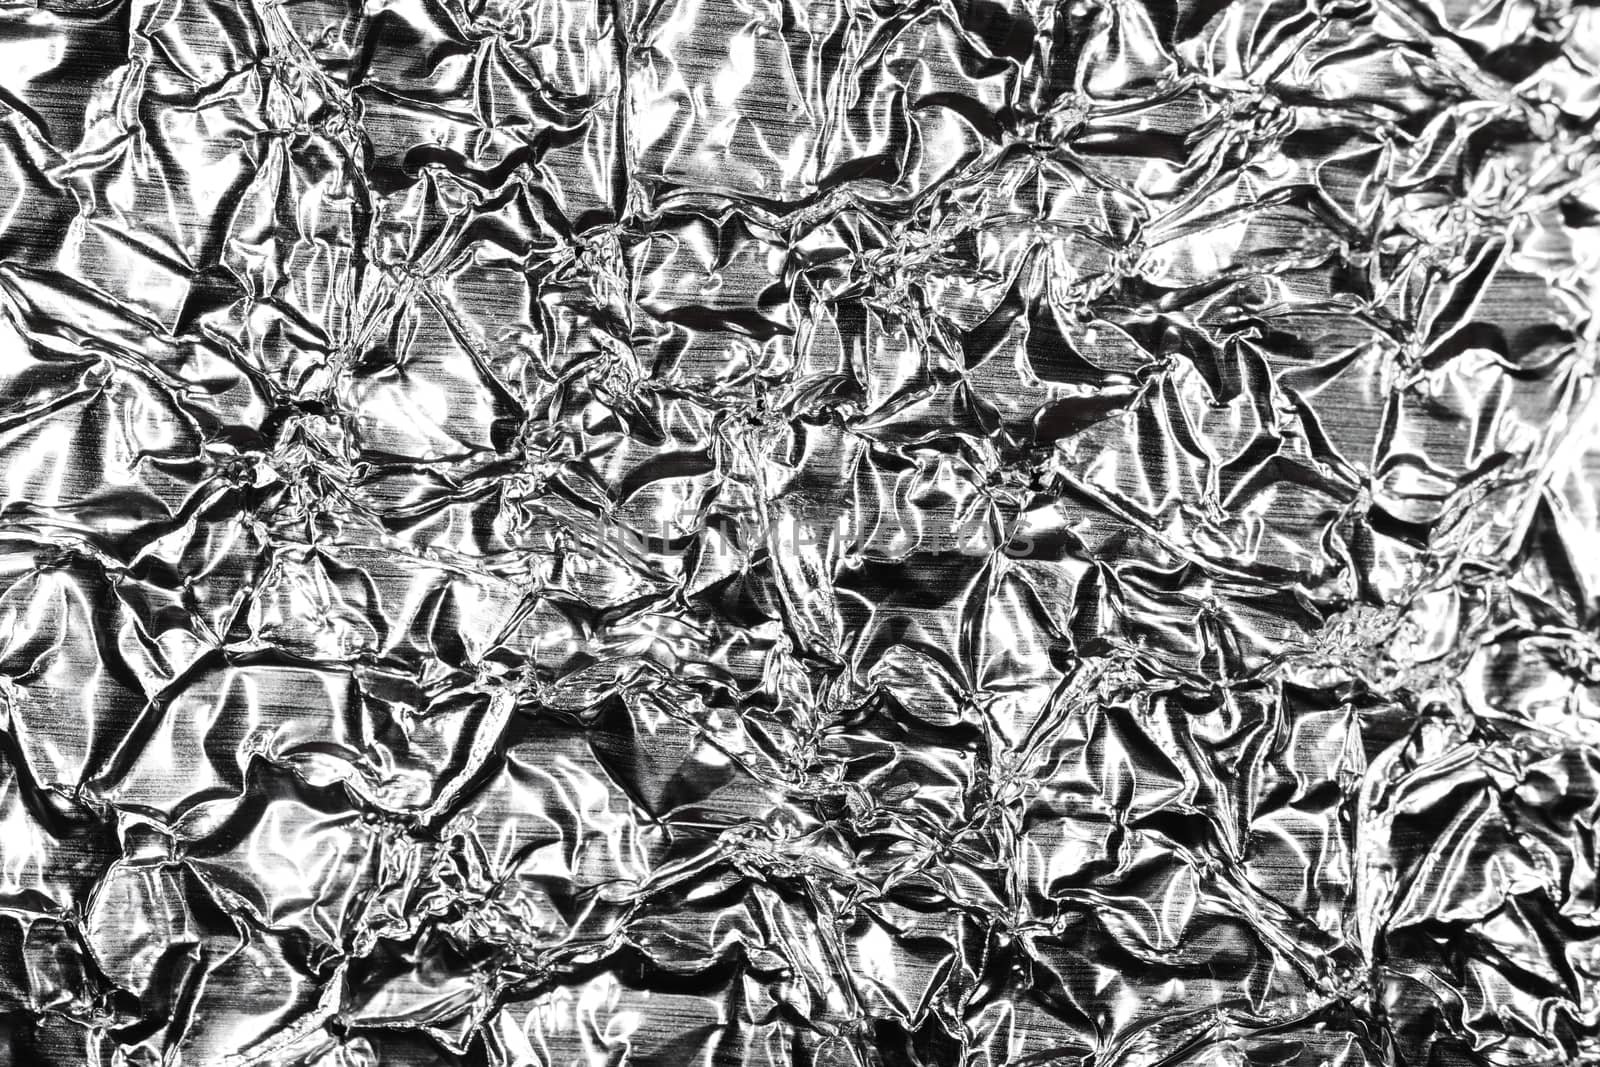 Monochrome Crumpled Metallic Black & White Foil Background Texture.. by sanches812